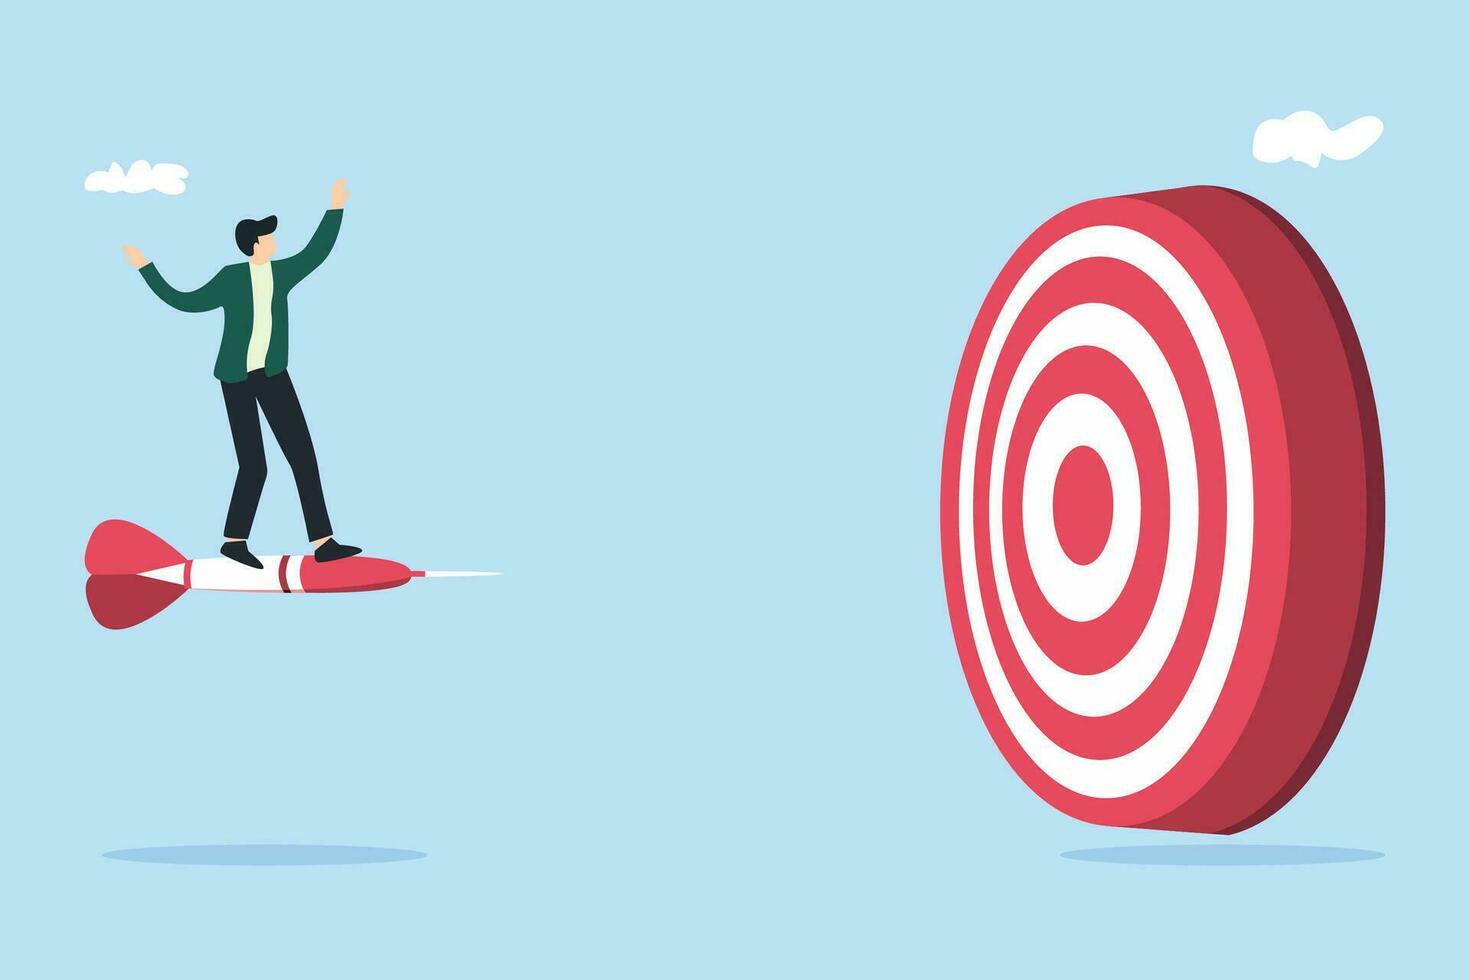 Business achievement, improvement goal, success target or career growth concept. businessman riding on arrow towards target. Vector illustration.